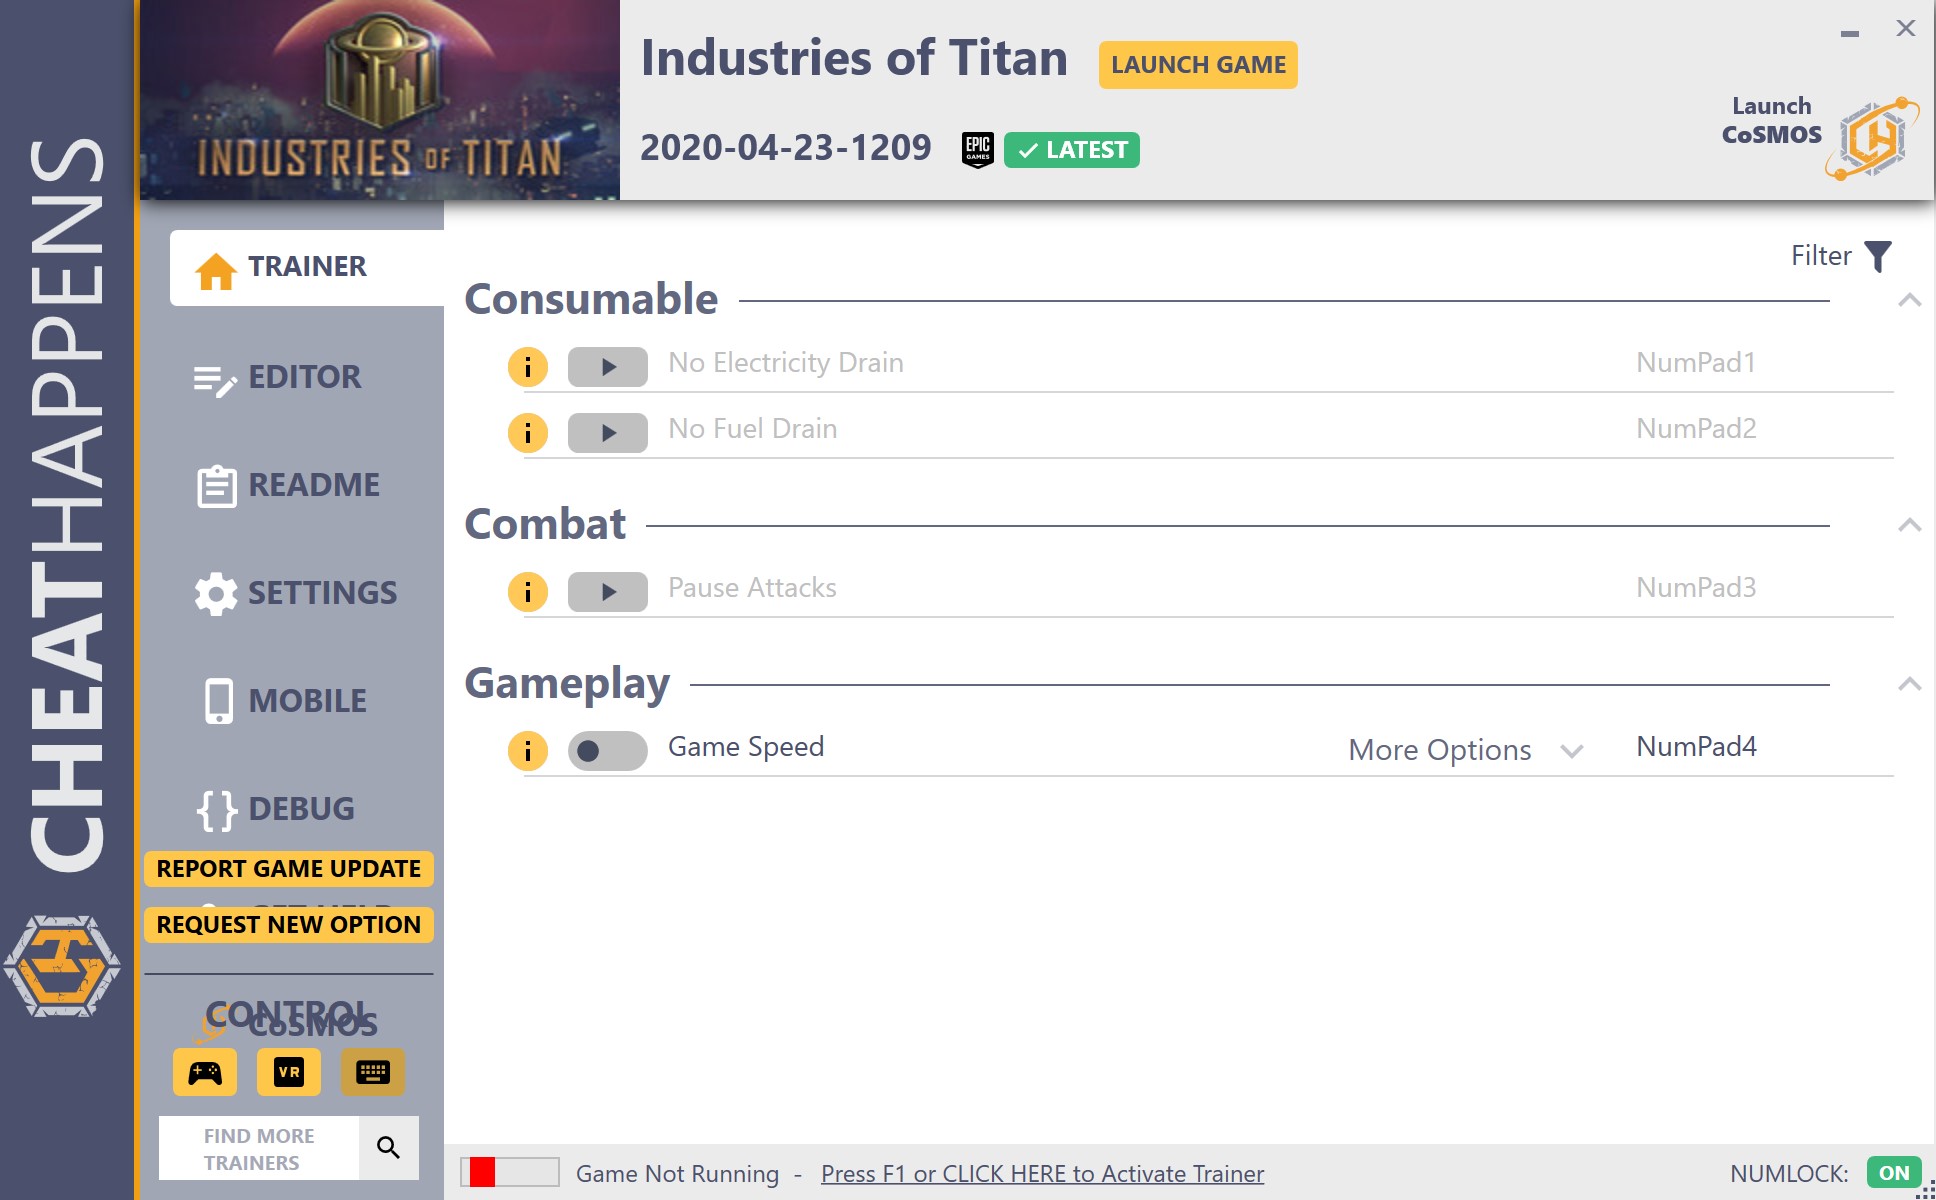 Industries of Titan v2020-04-23-1209 Trainer